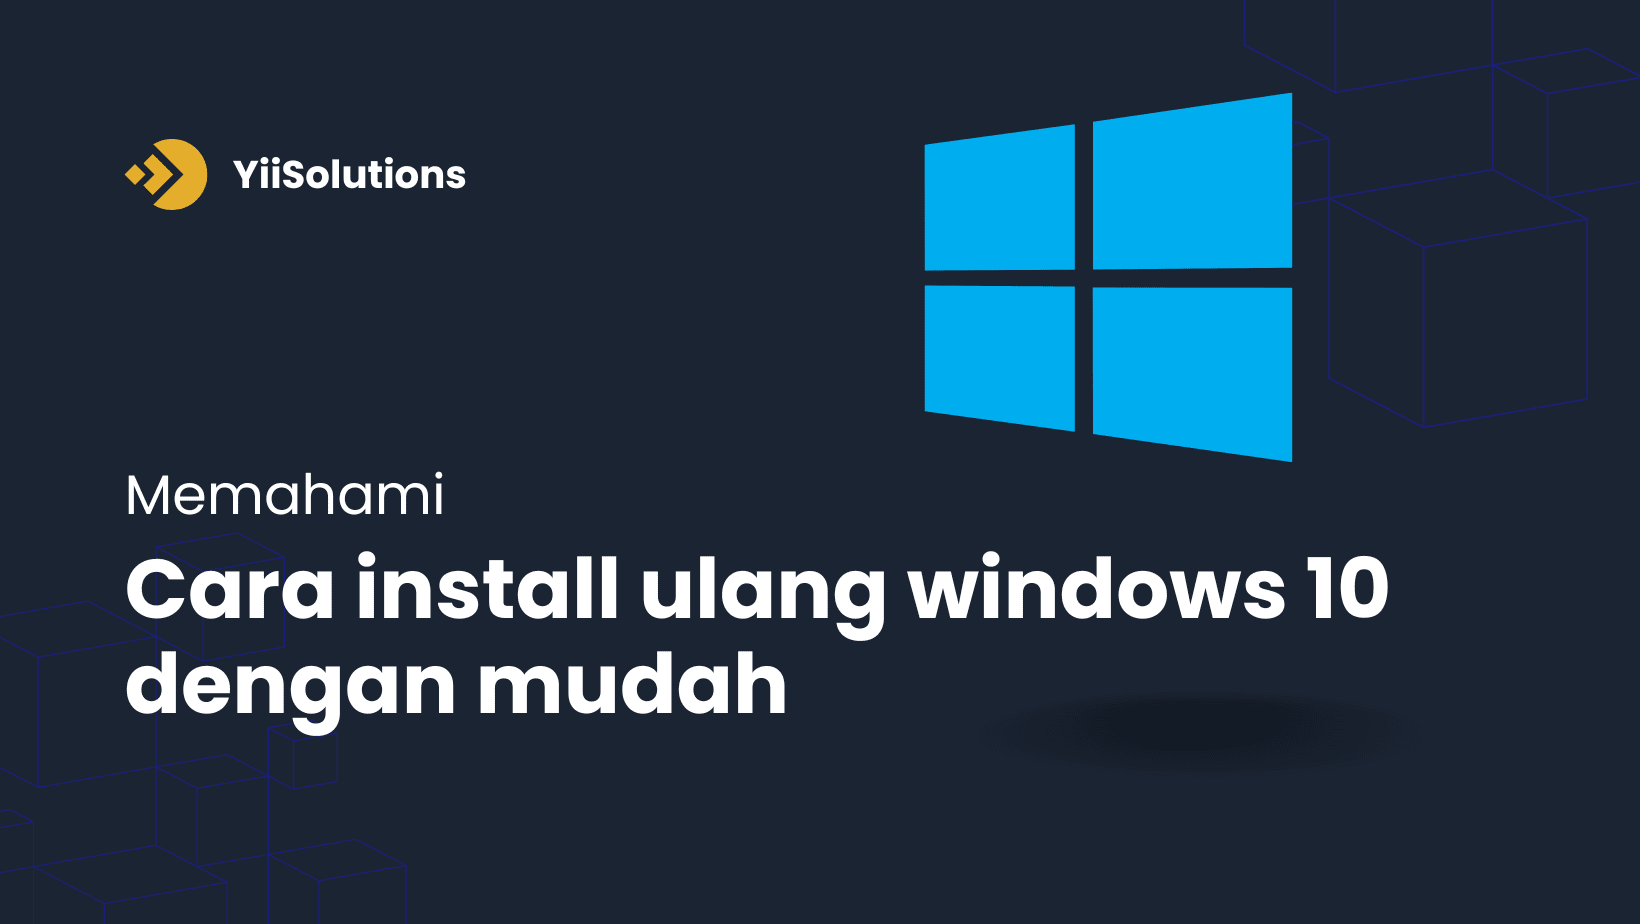 Begini cara install ulang windows 10 dengan mudah